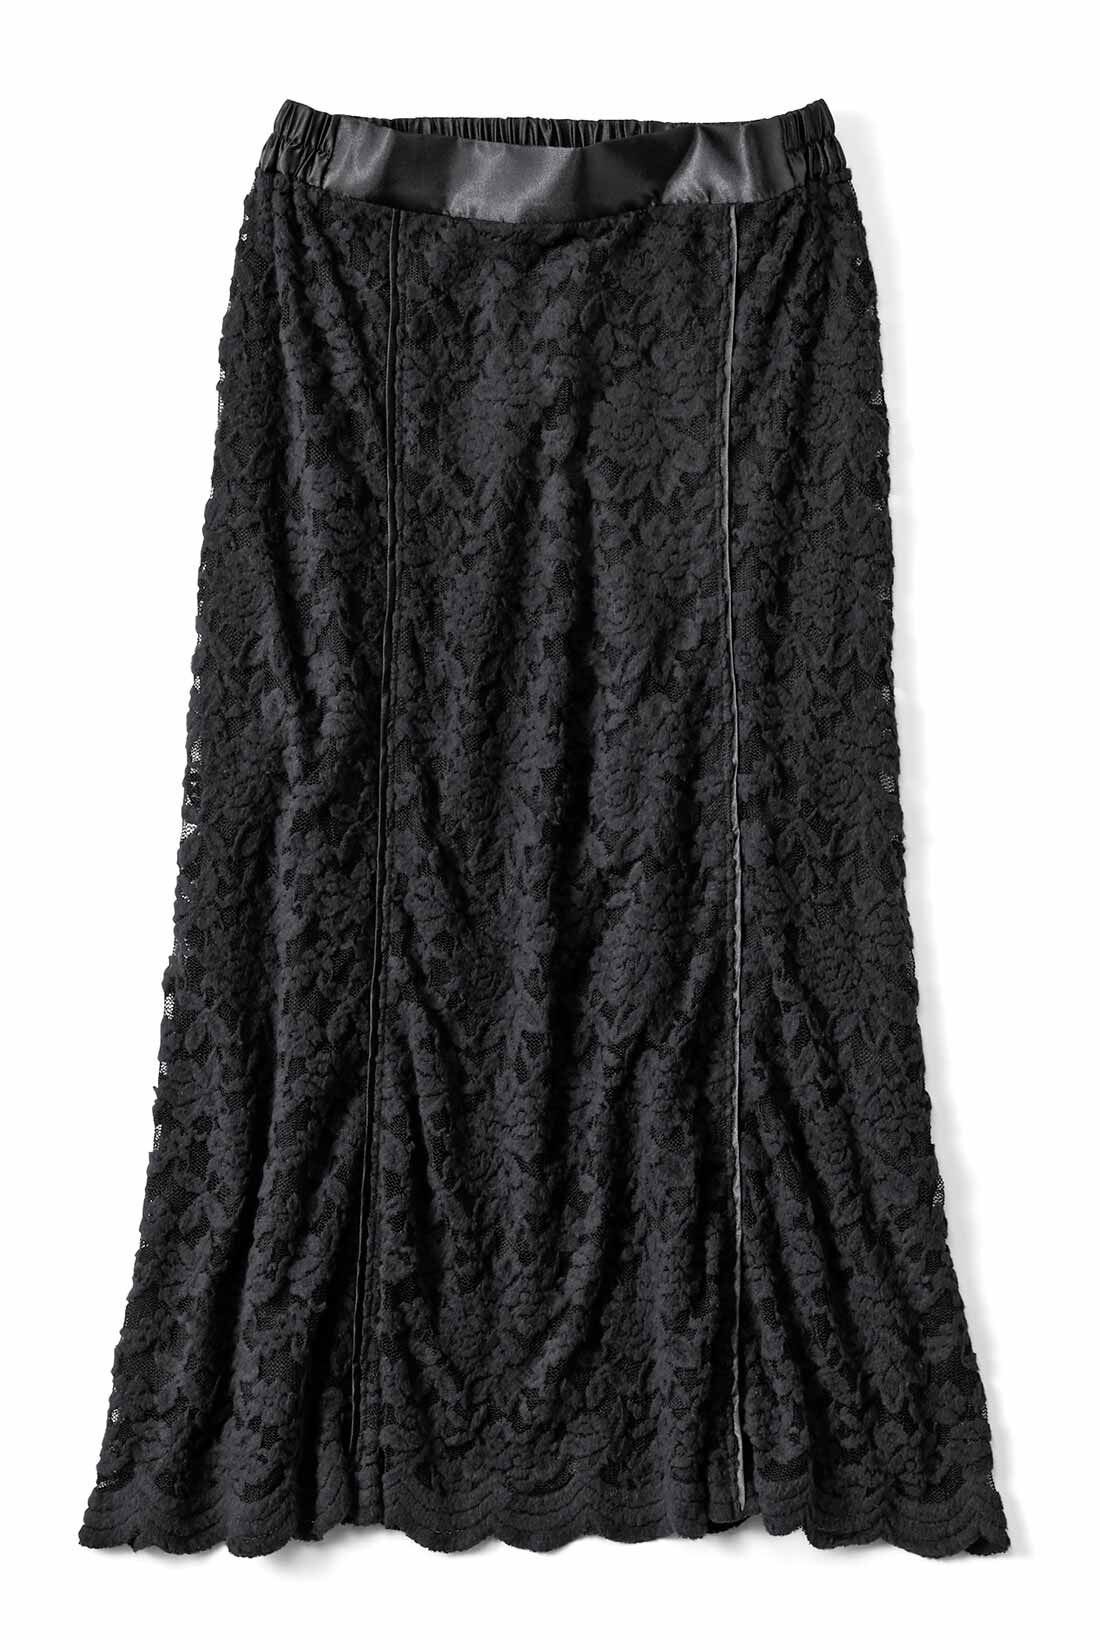 Real Stock|IEDIT[イディット]　帯電防止インナーがうれしい 起毛レーススカート〈ブラック〉|ブラック　サテンテープの切り替えが作るきれいな縦長シルエットが魅力。